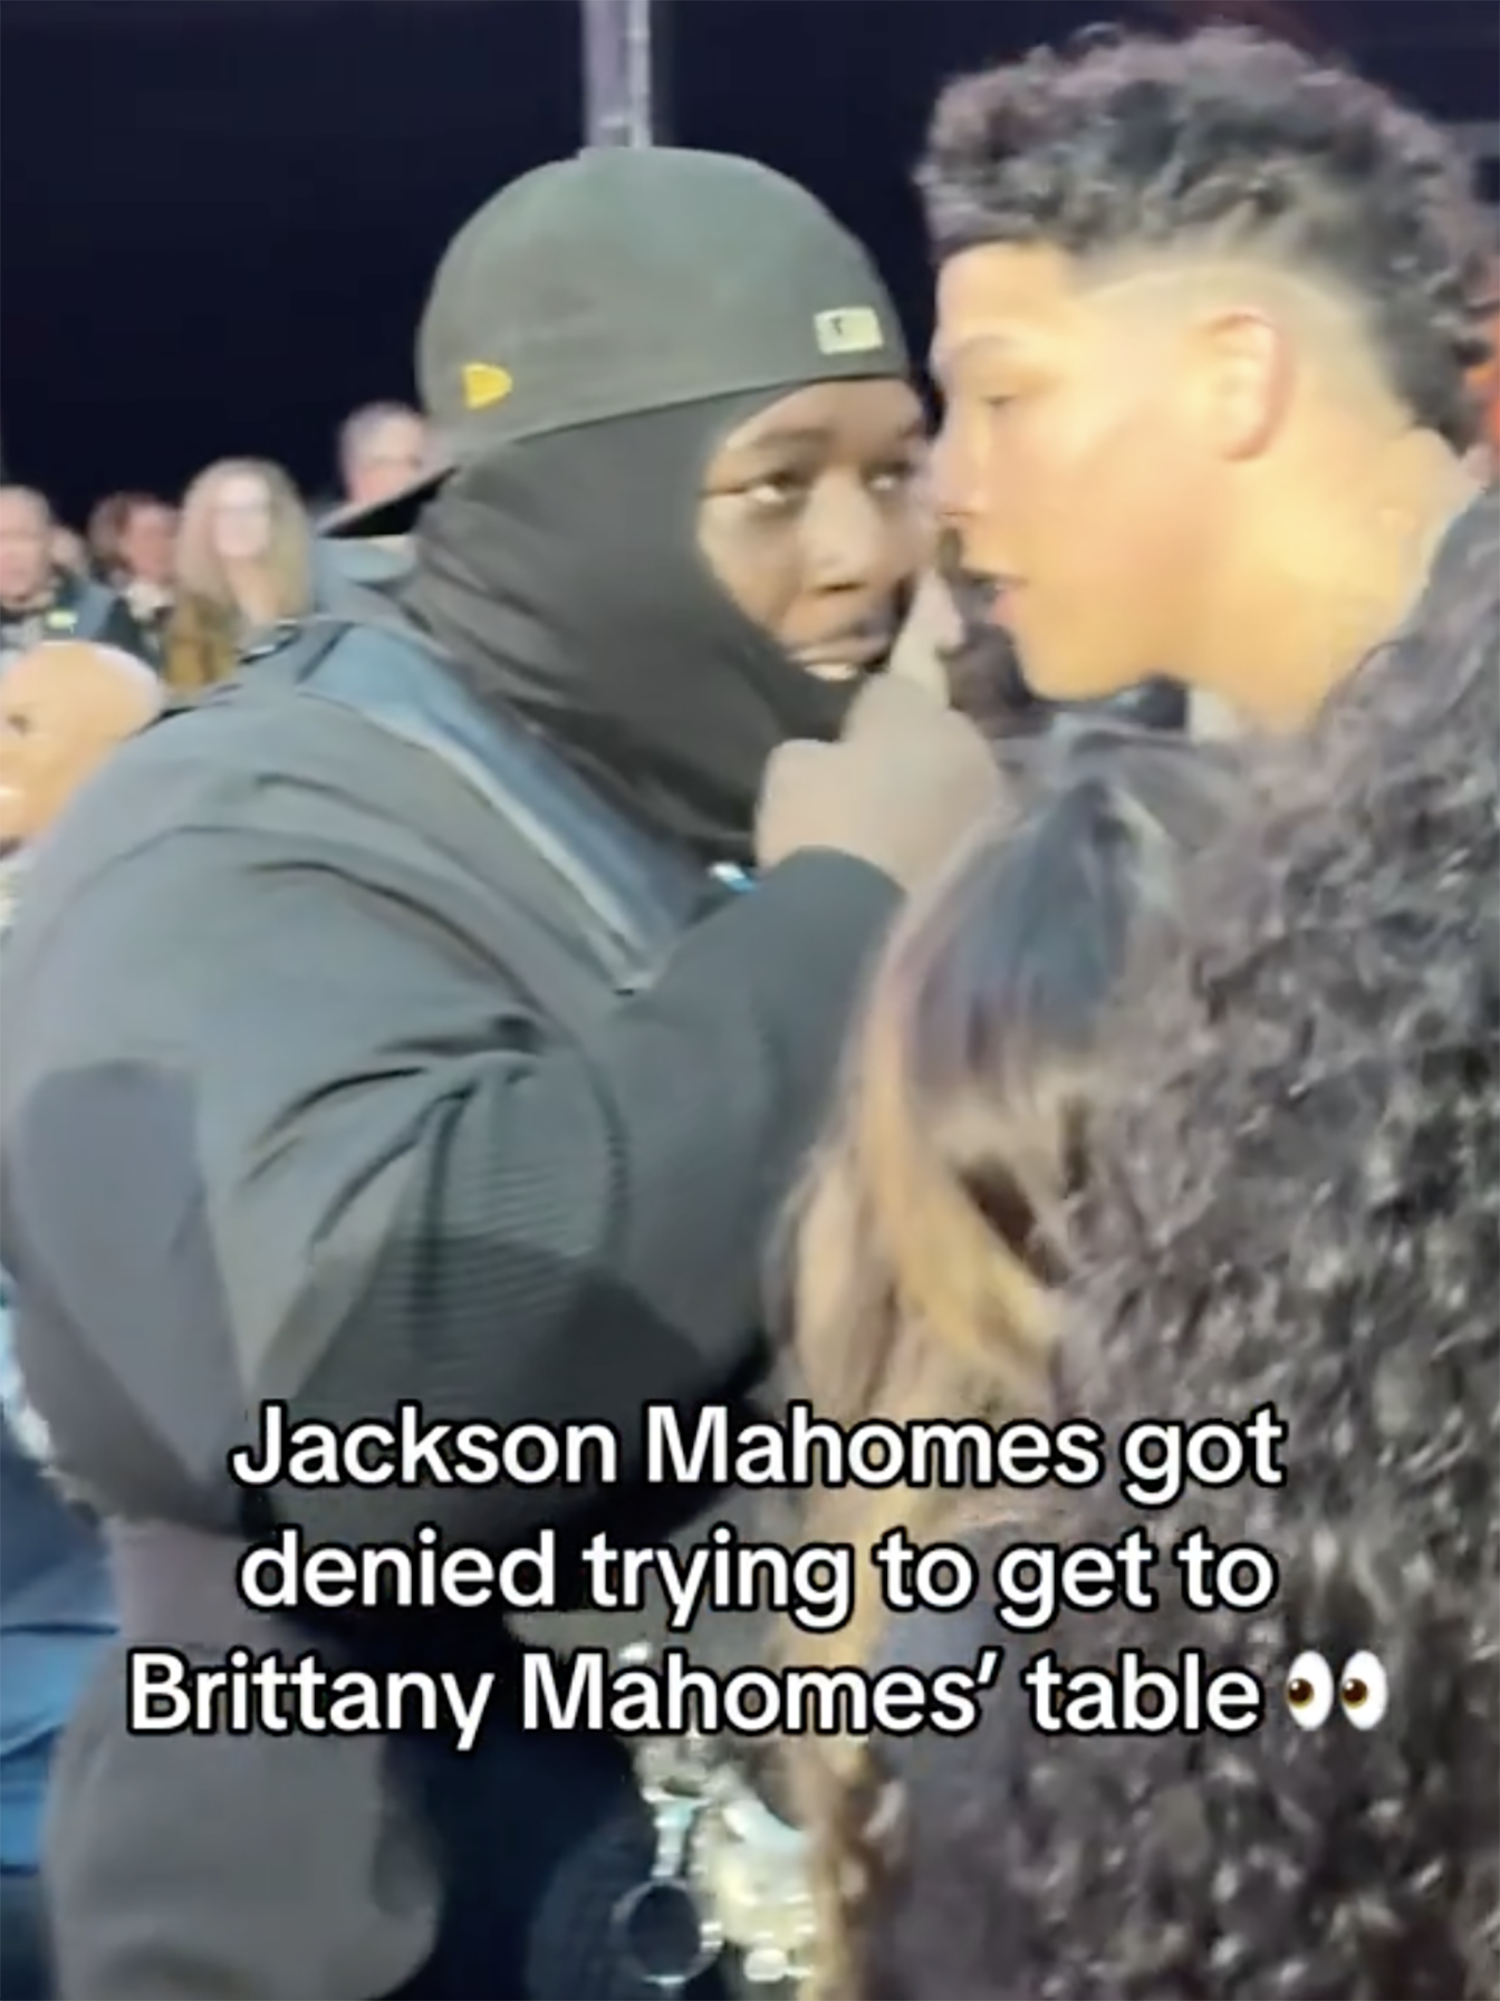 Jackson Mahomes tries getting into VIP area